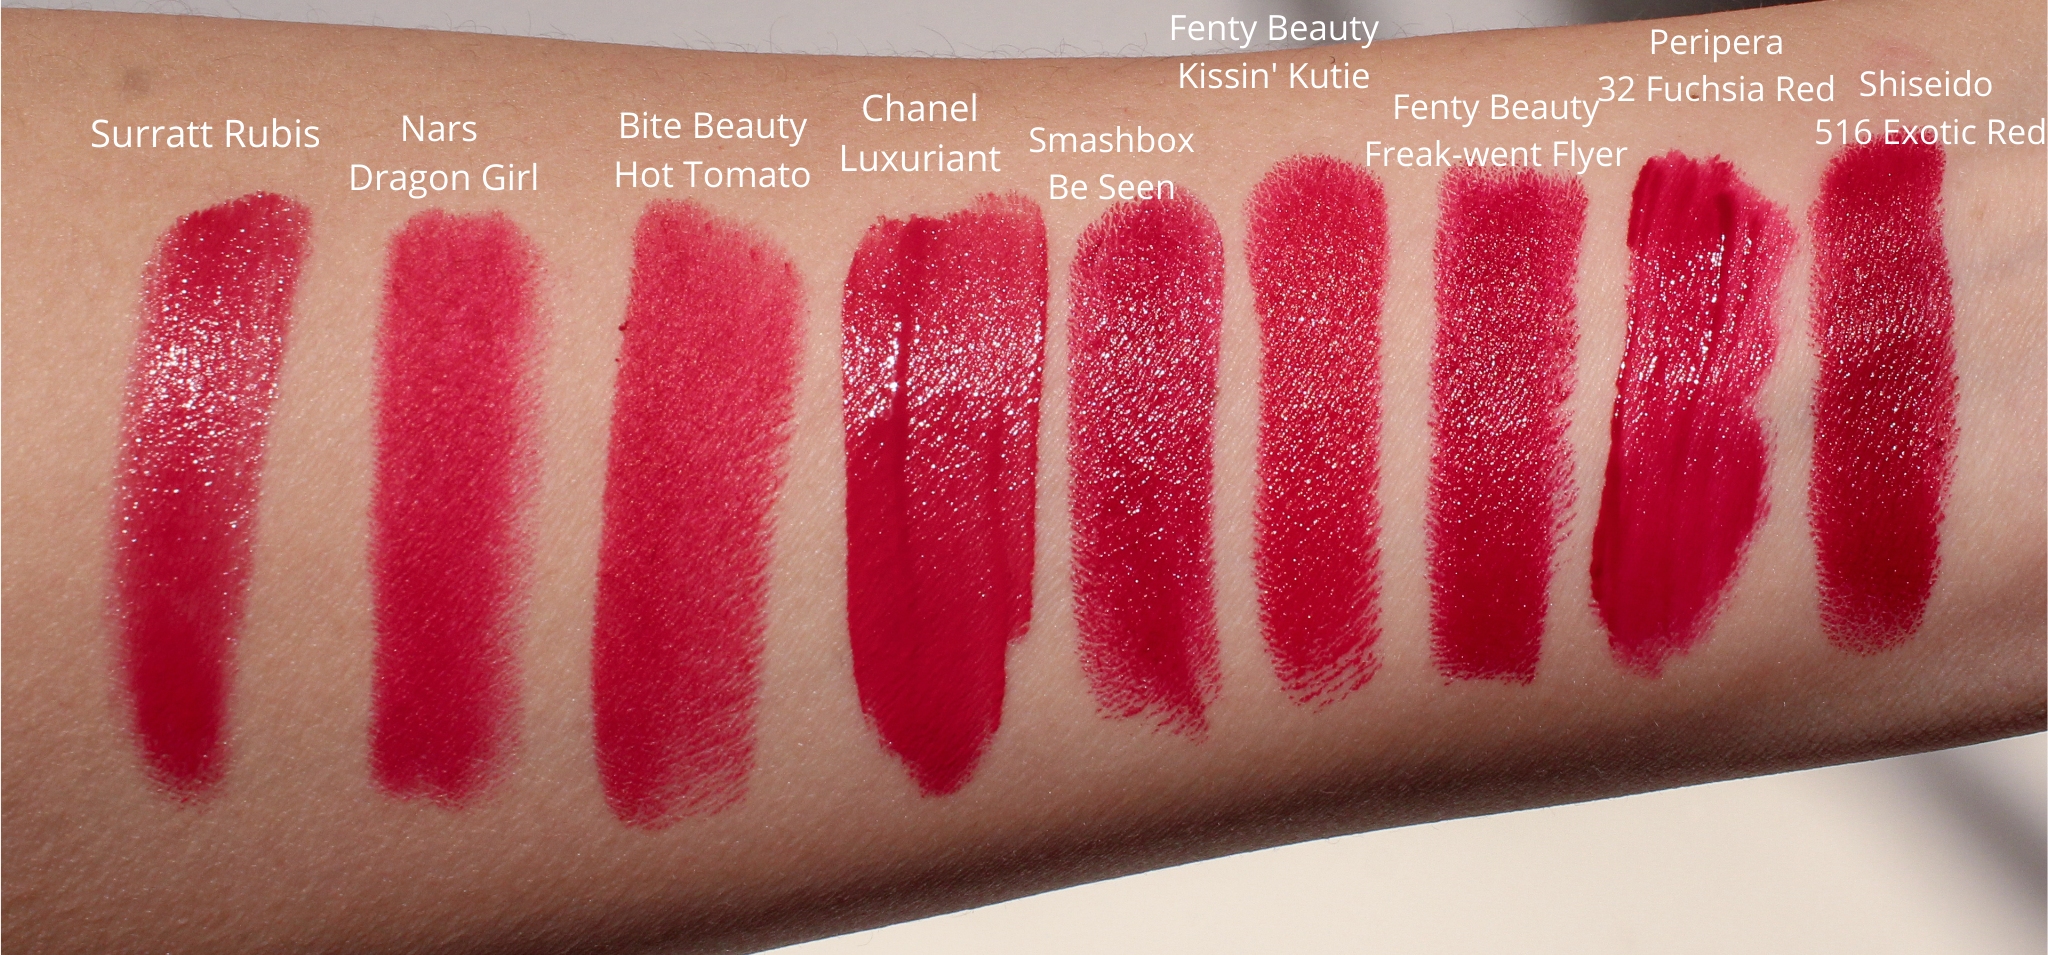 Classic Colour Lipstick in Cherry Red